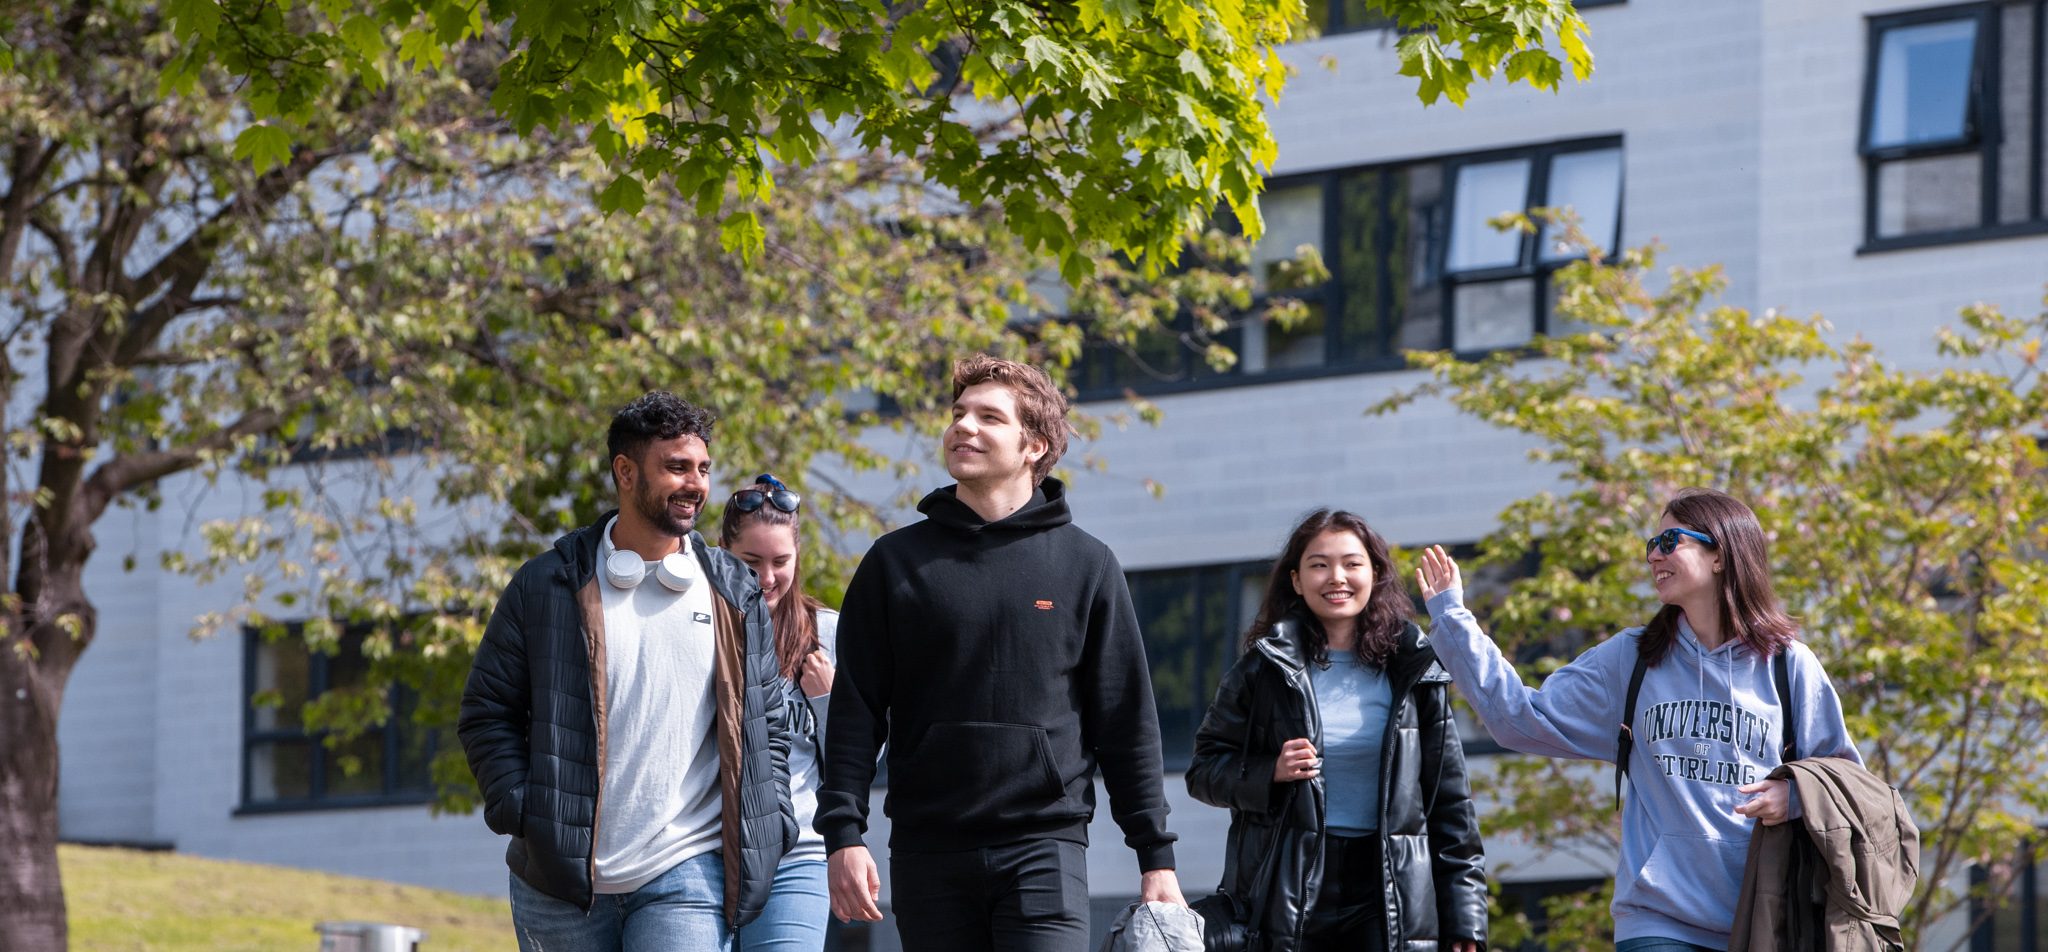 photo of students walking on campus - life skills at uni